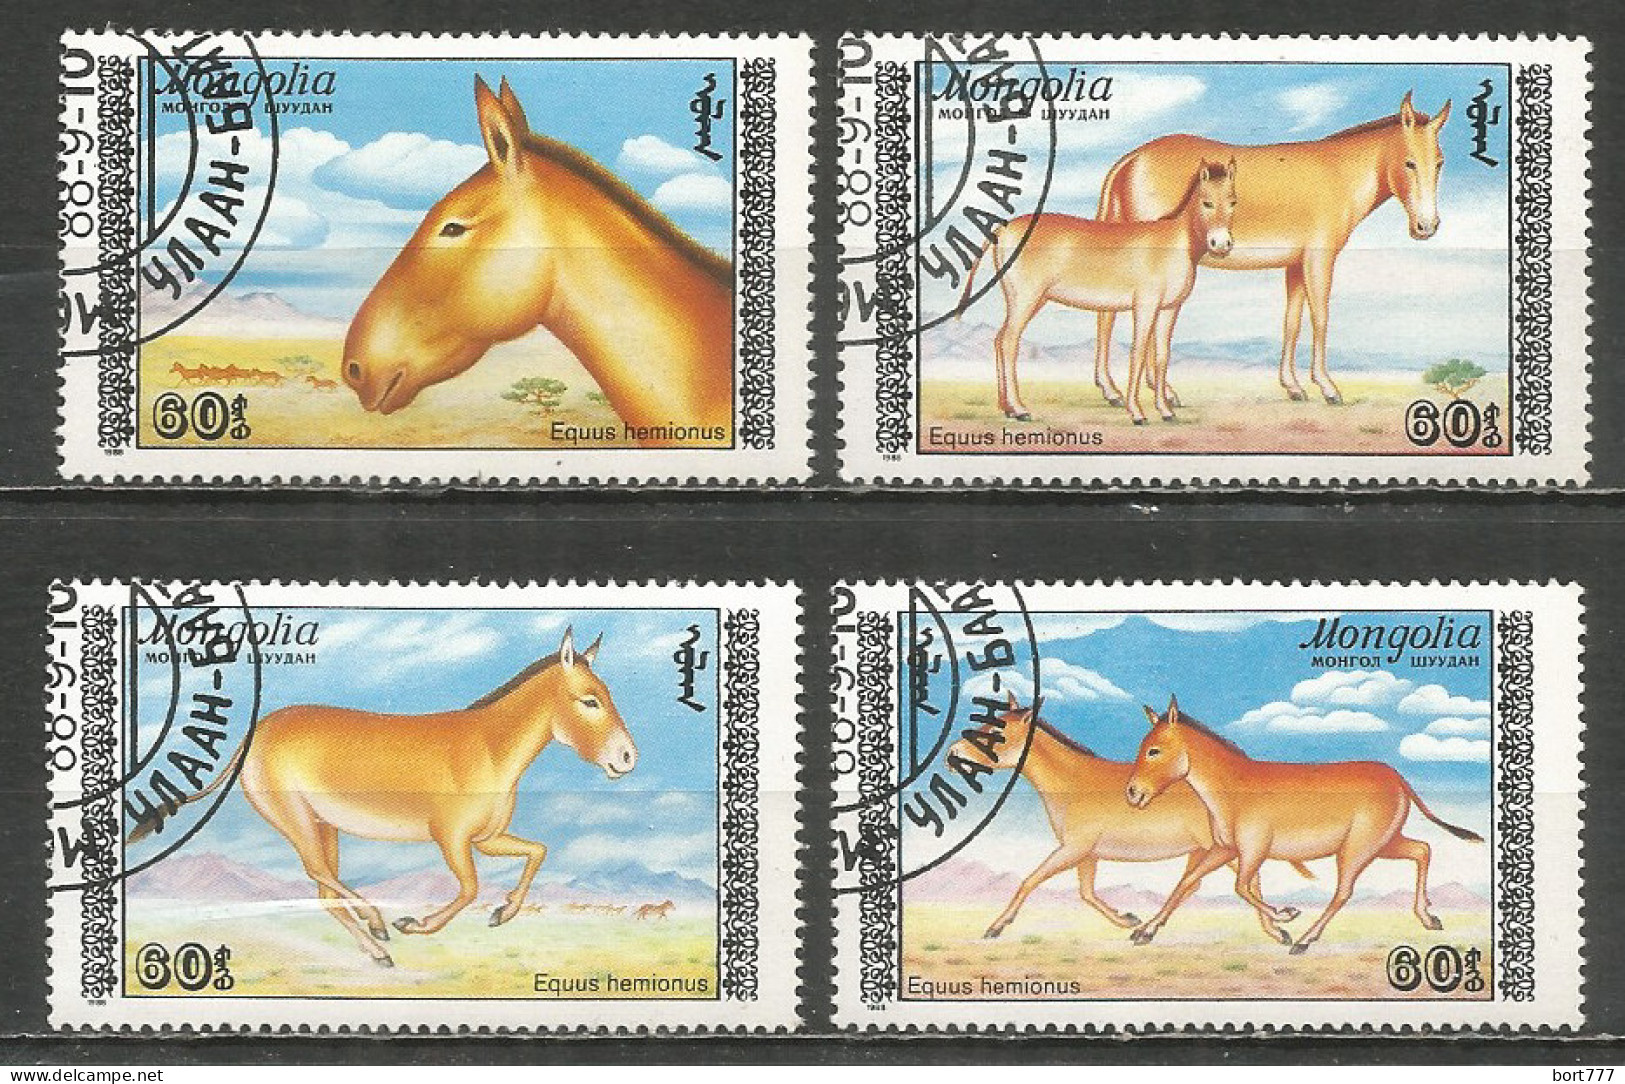 Mongolia 1988 Used Stamps CTO Animals - Mongolia